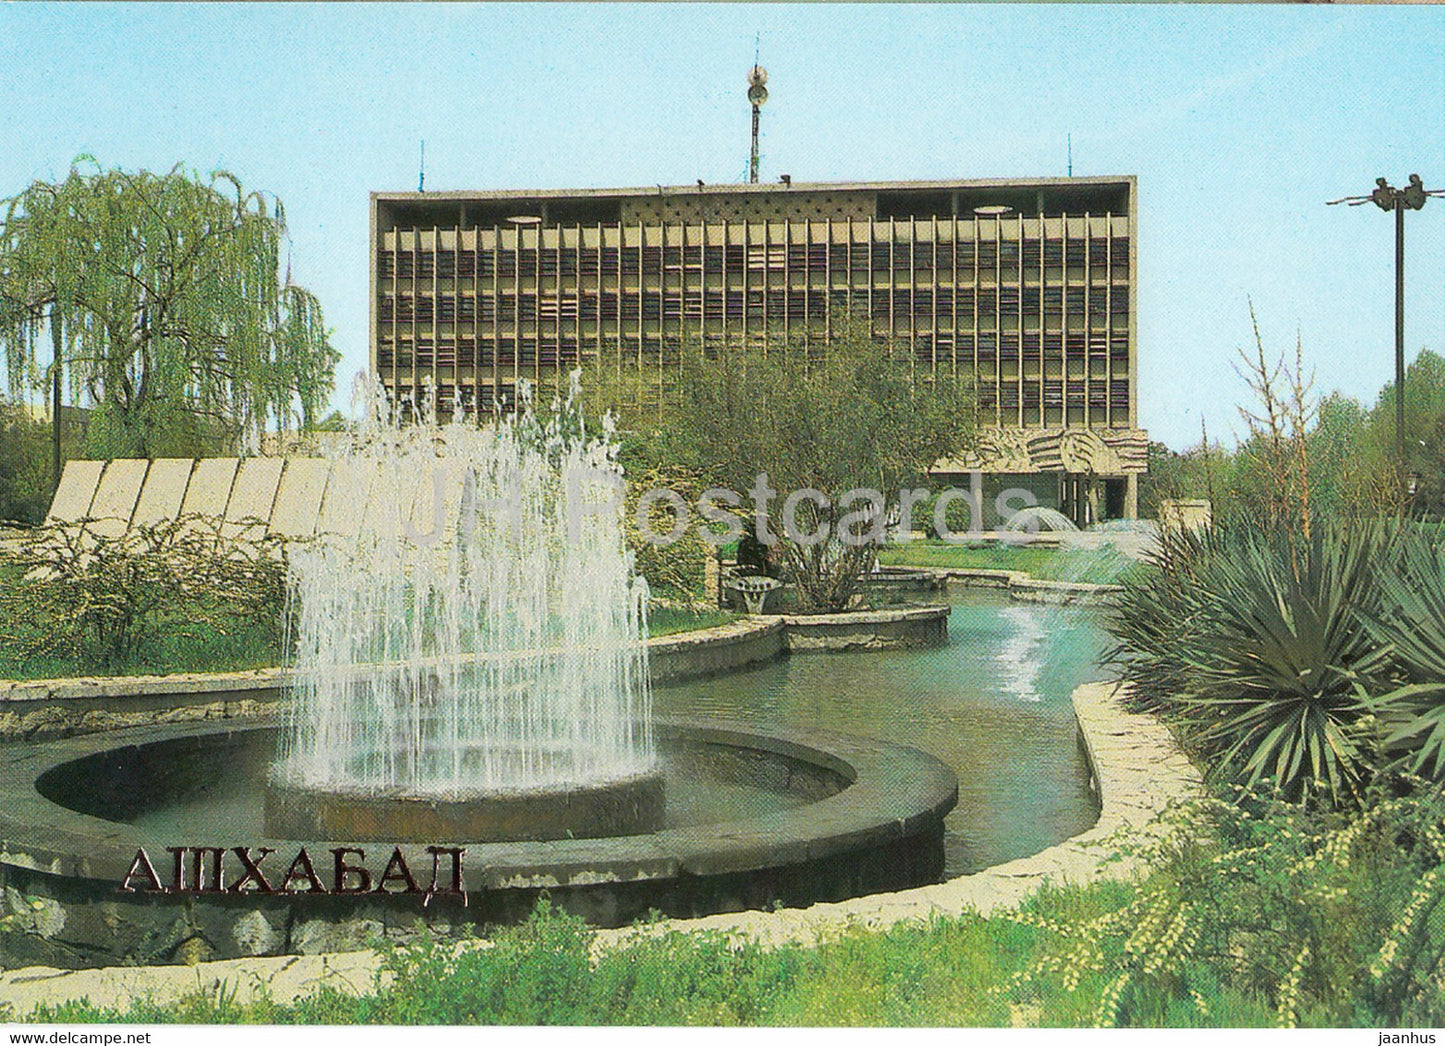 Ashgabat - Ashkhabad - Karl Marx Square - The Head Office of Kara Kum Canal - 1984 - Turkmenistan USSR - unused - JH Postcards